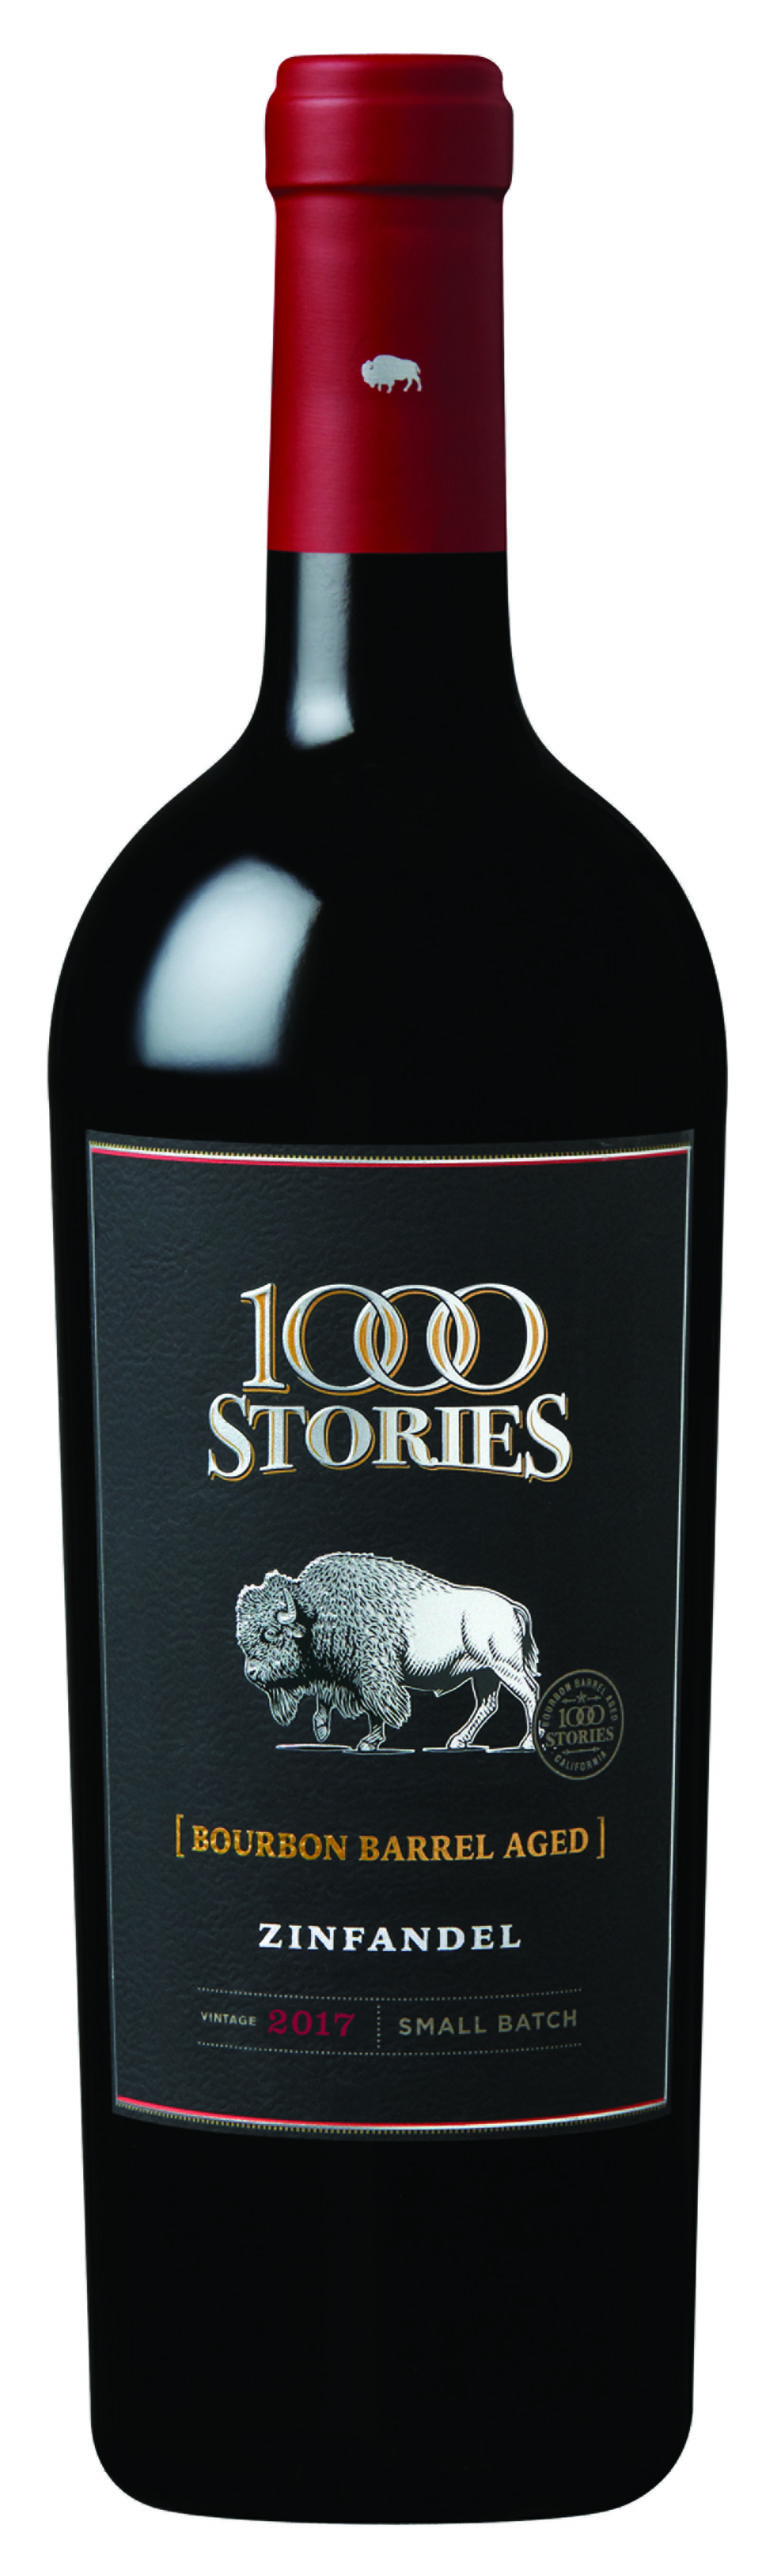 1000 Stories – Vino tinto Zinfandel 750ml.